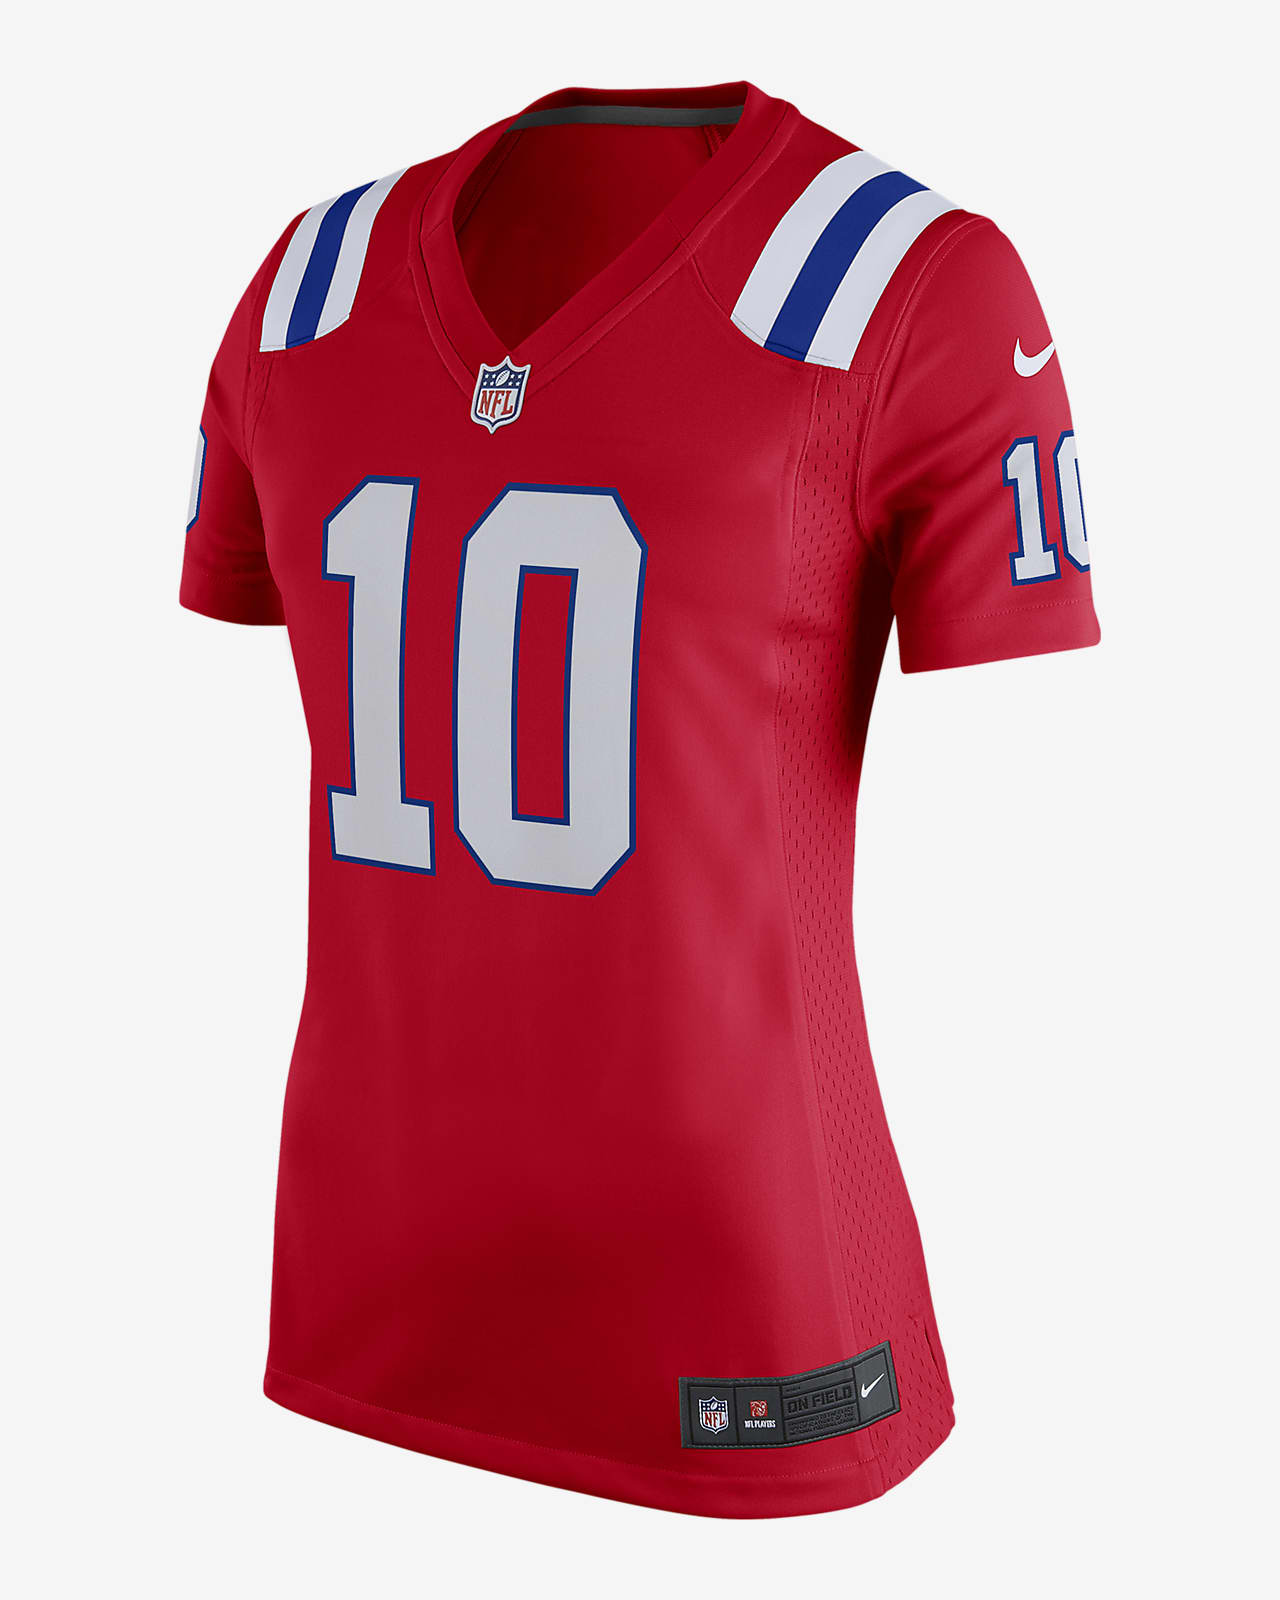 NFL New England Patriots (Mac Jones) Women's Game Football Jersey